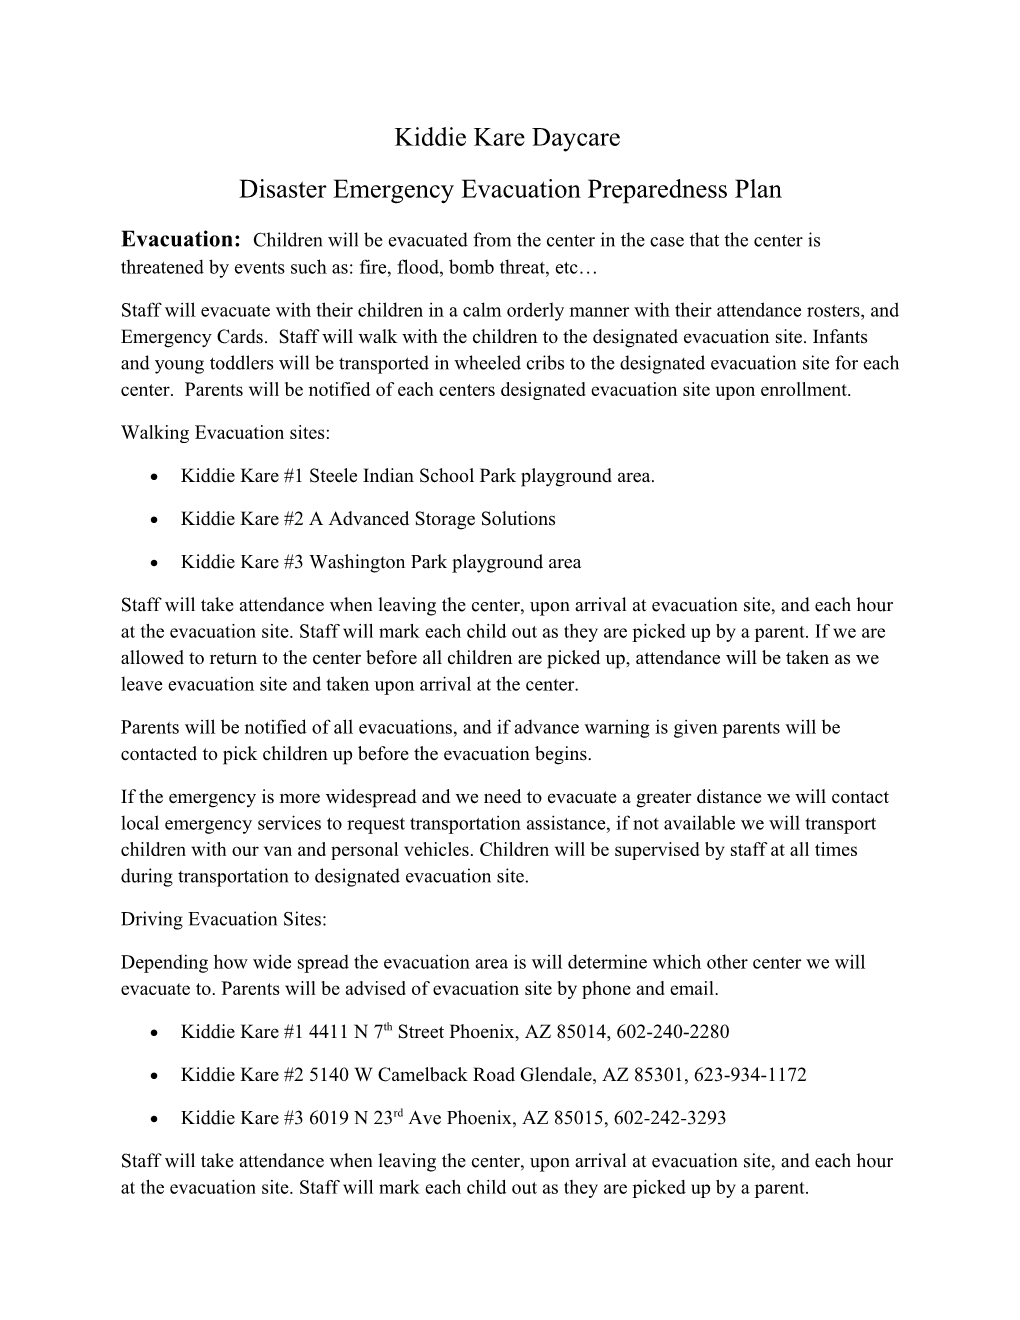 Disaster Emergency Evacuation Preparedness Plan